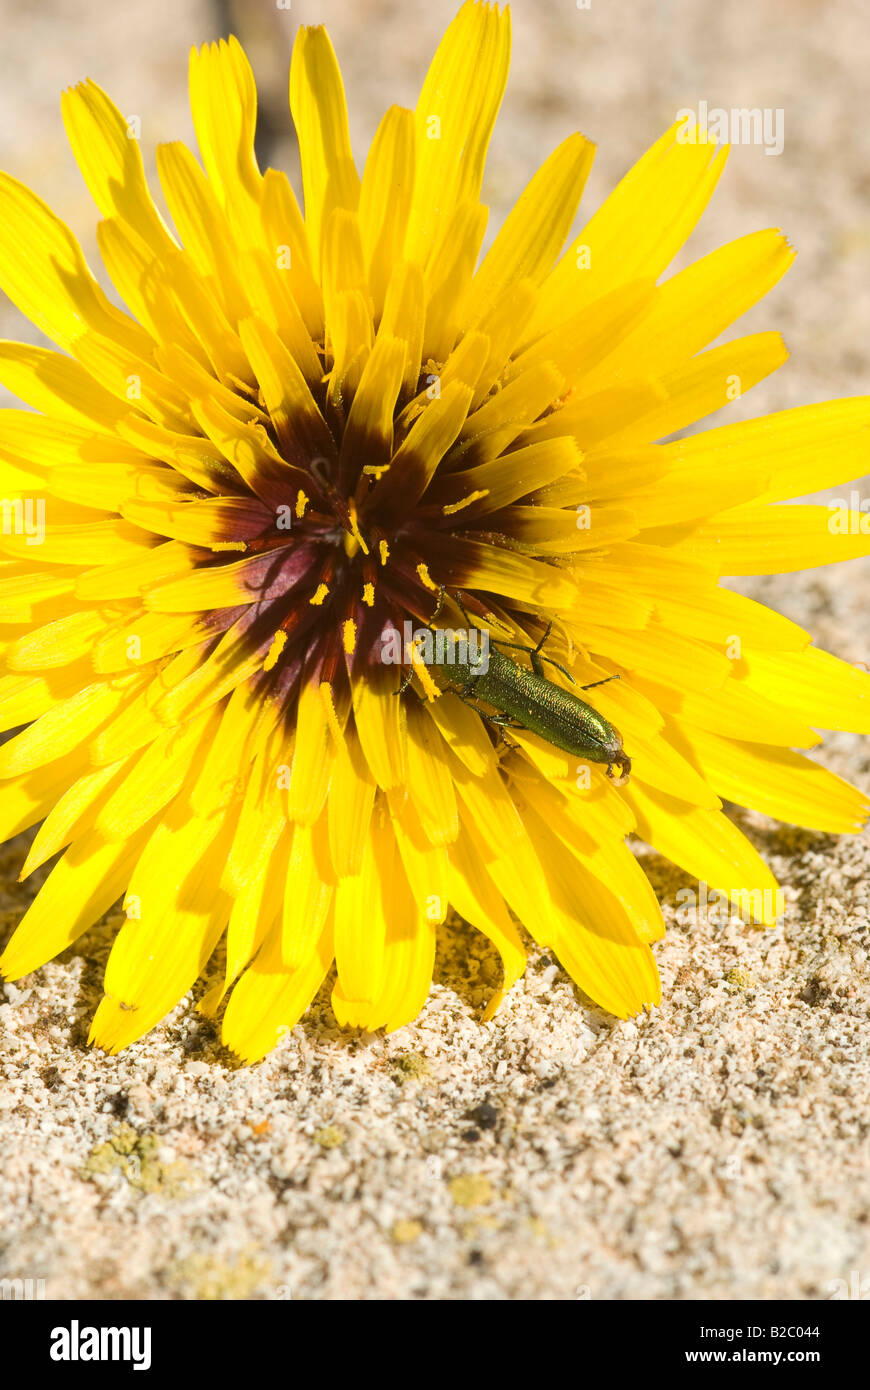 Spanish fly (Lytta vesicatoria) on a yellow sunflower, flower pollen, Majorca, the Balearic Islands, Spain, Europe Stock Photo